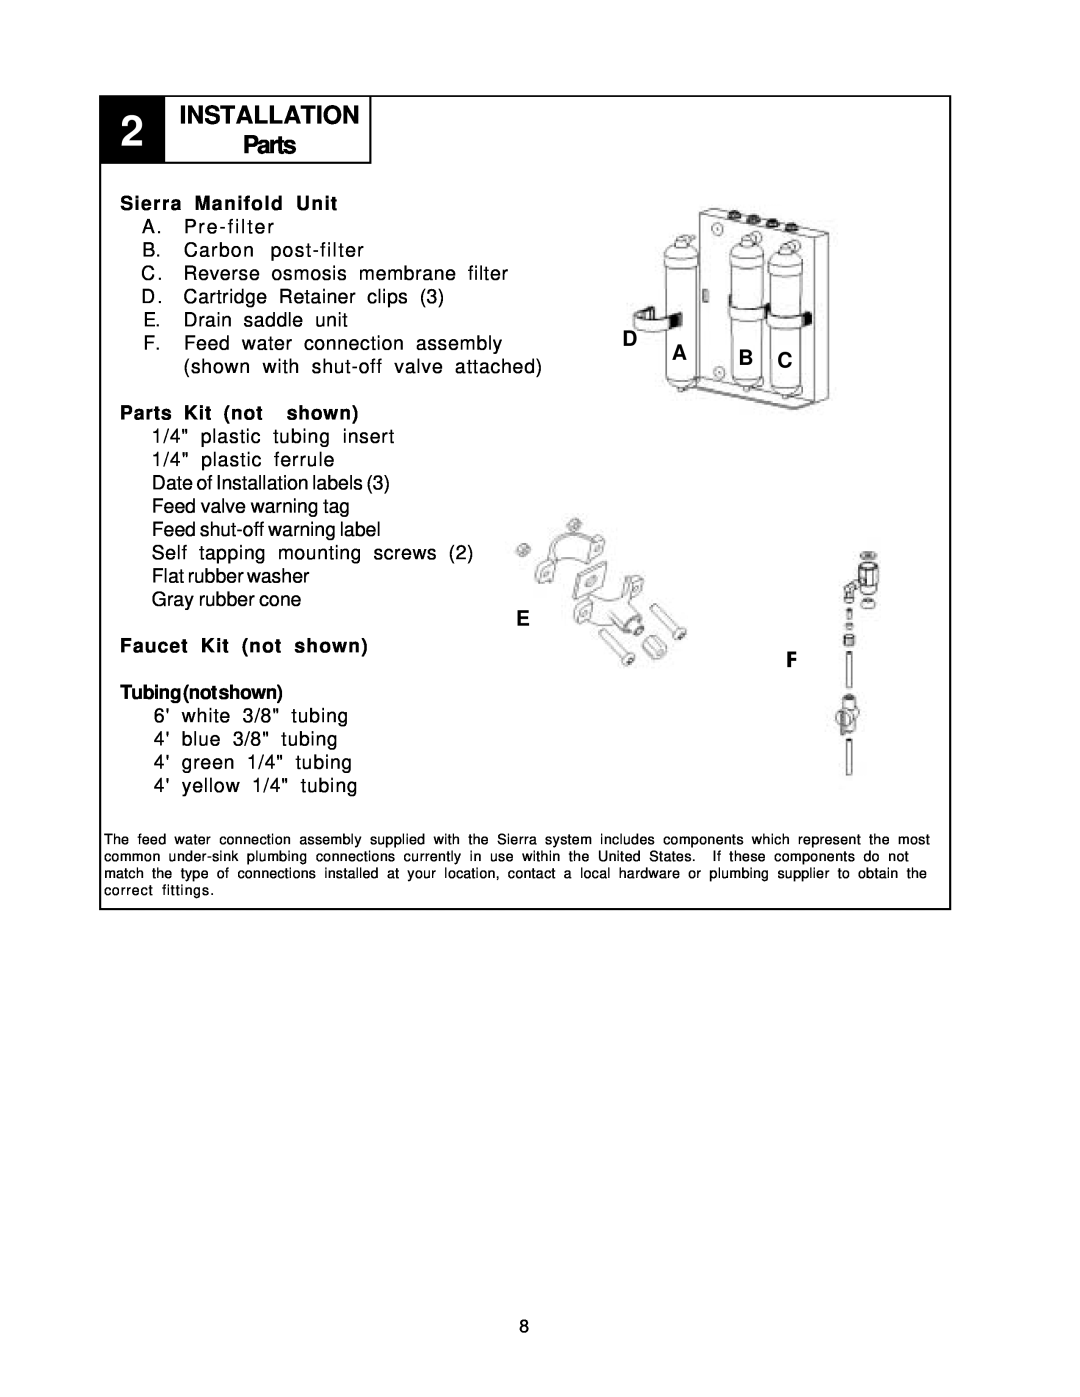 Sierra PN103257 owner manual INSTALLATION Parts, Sierra, Manifold Unit, Kit not, shown, Faucet 